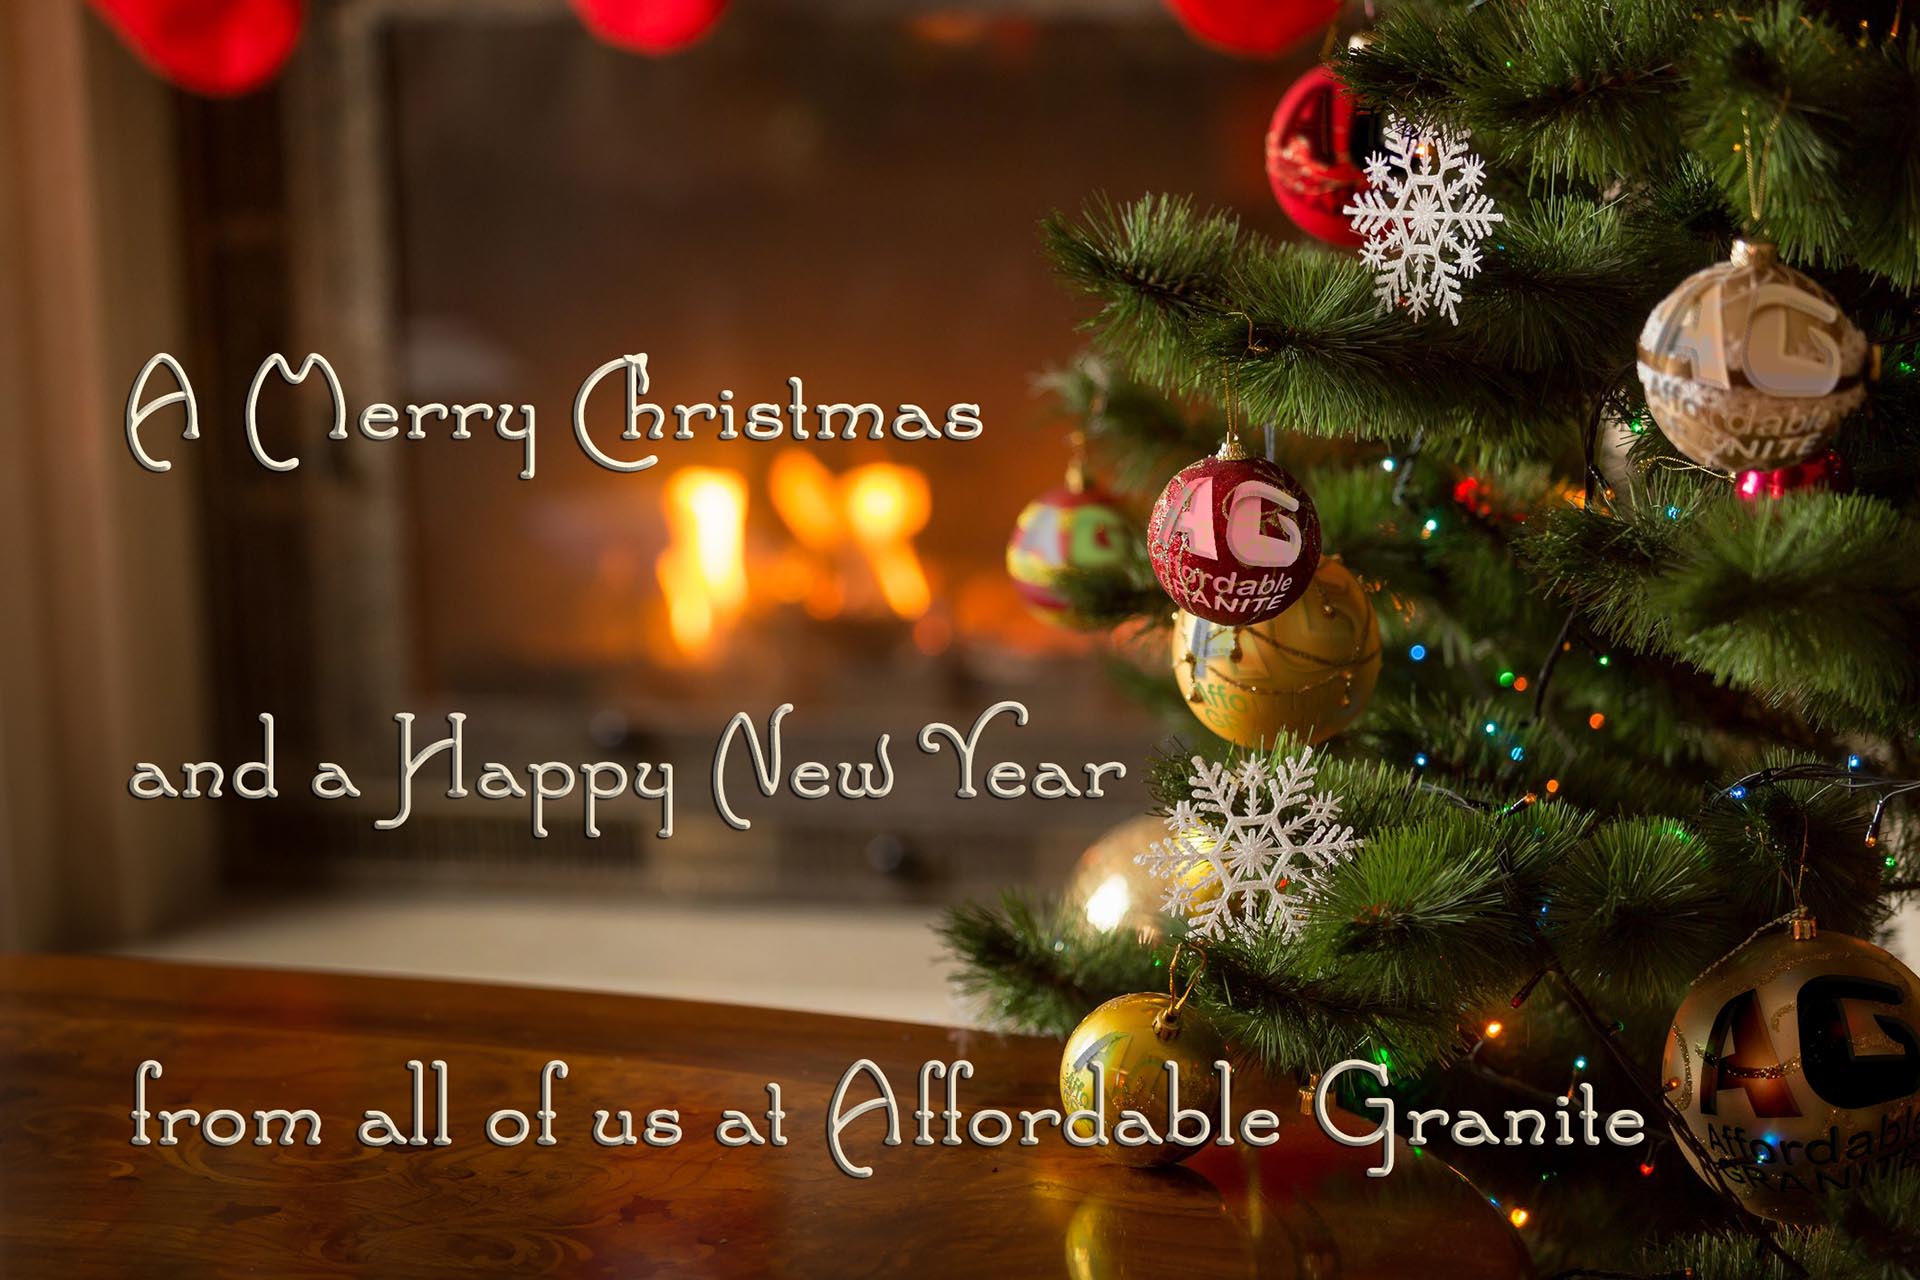 Affordable Granite Christmas Card 2021